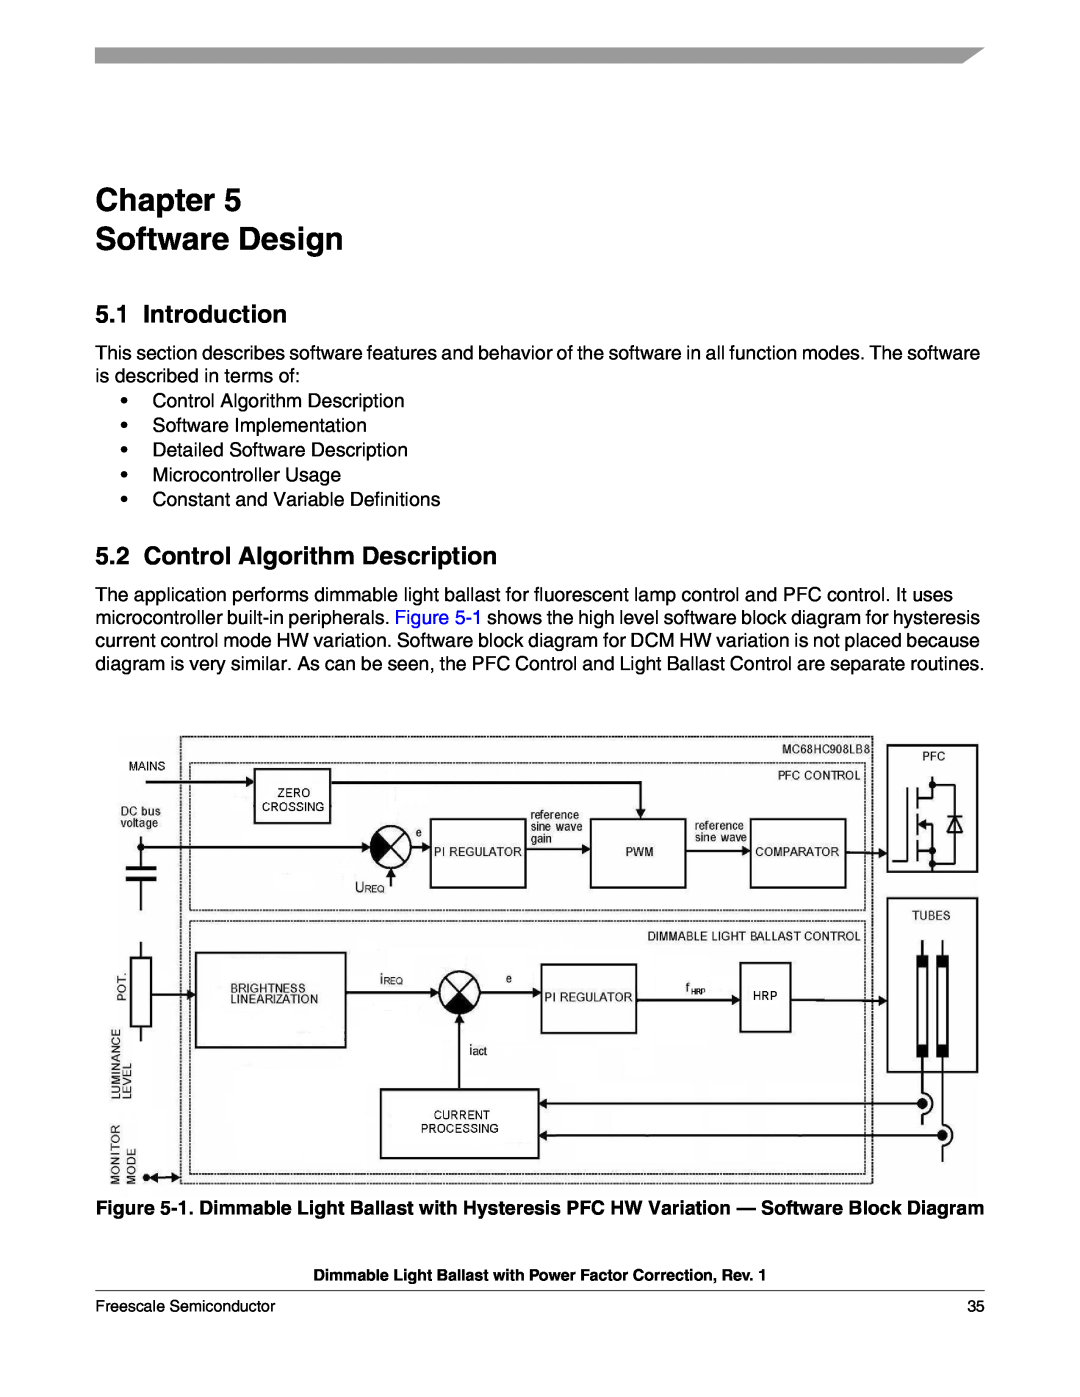 Freescale Semiconductor M68HC08 manual Chapter Software Design, Introduction, Control Algorithm Description 